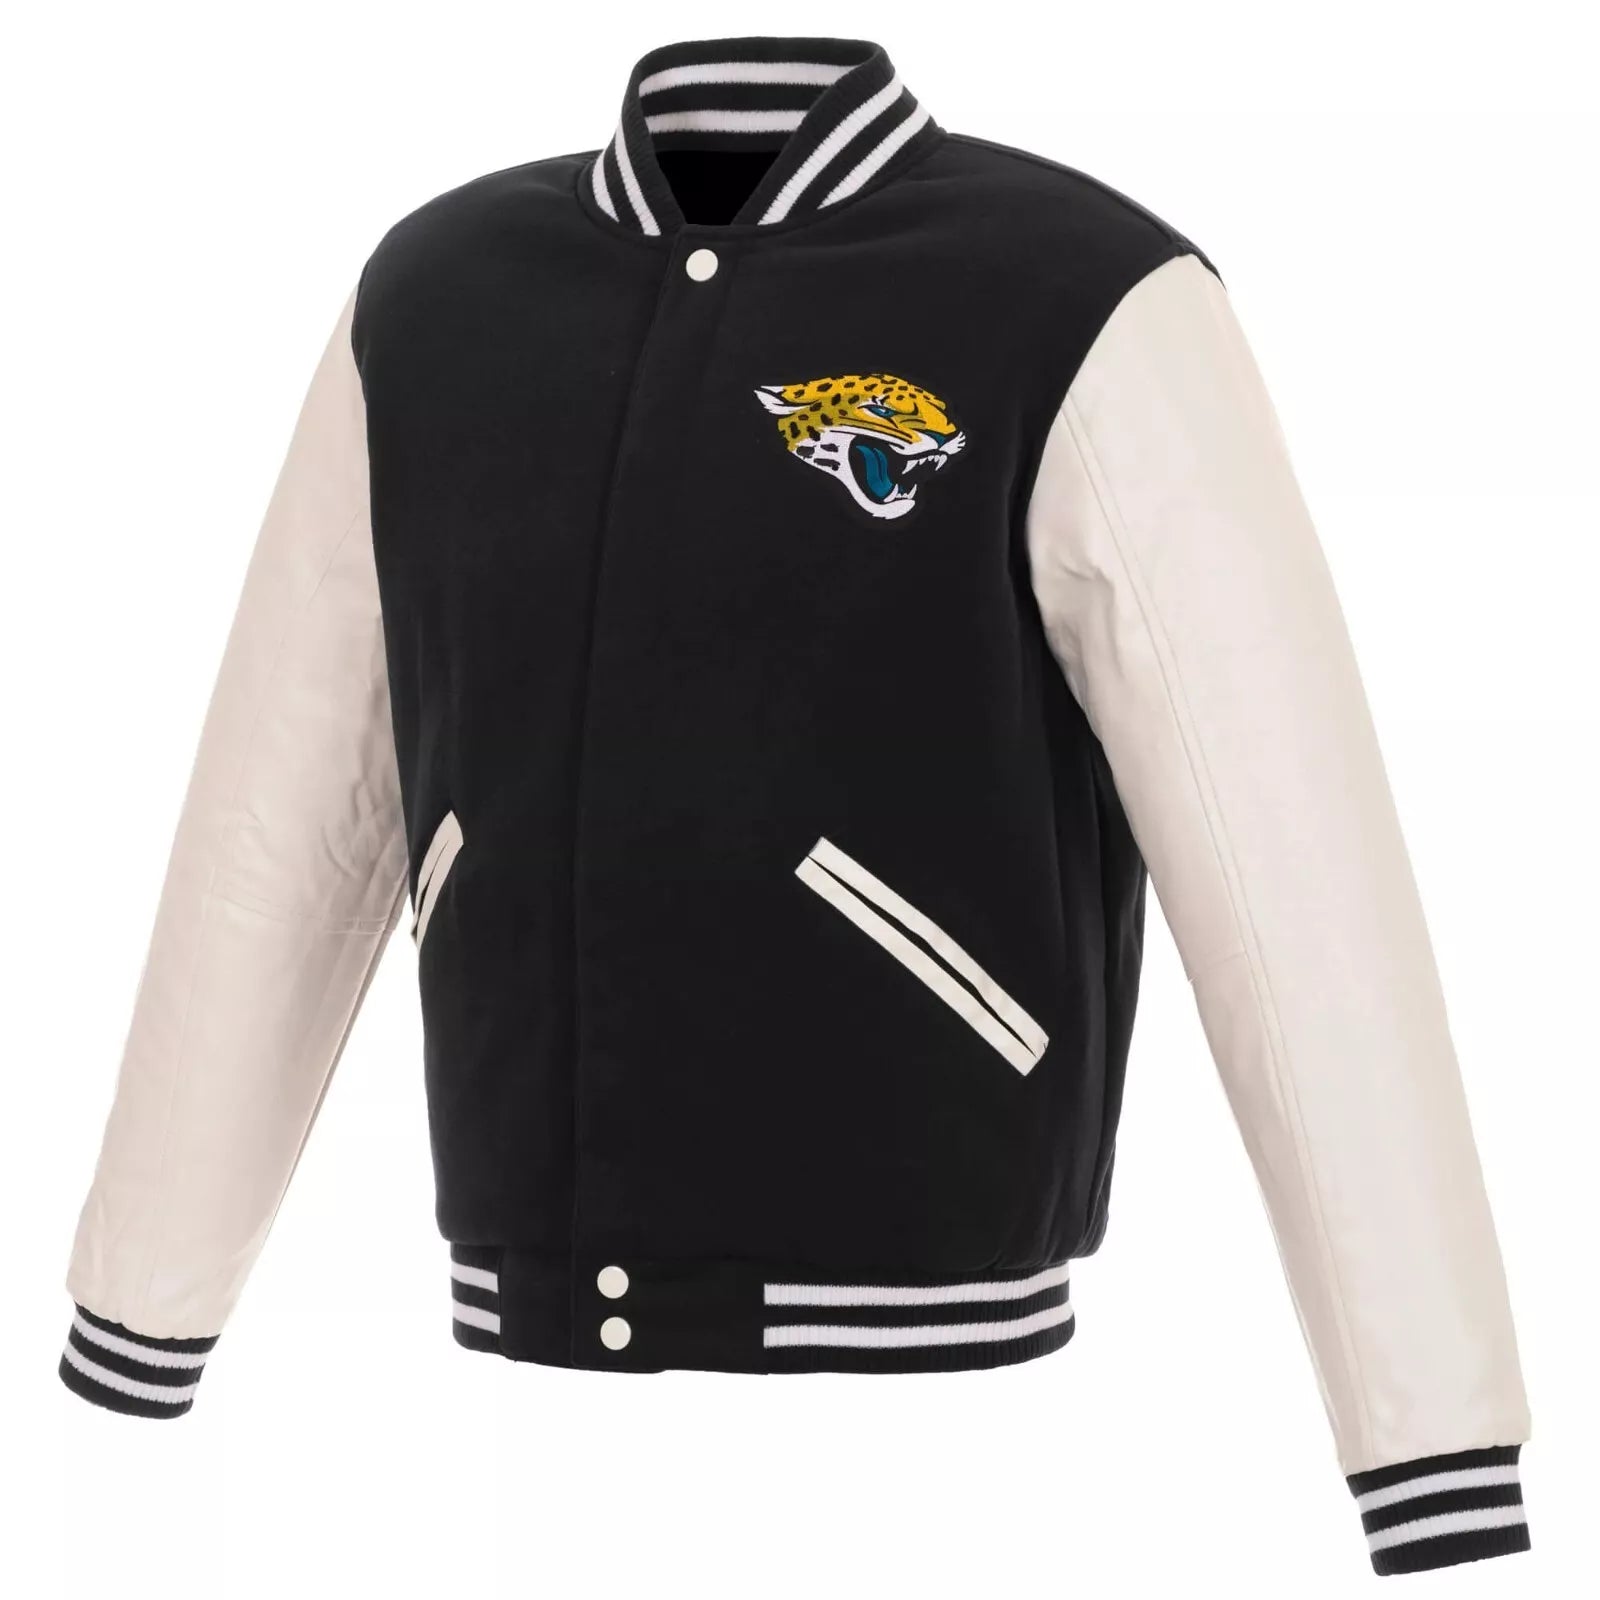 Letterman Jacksonville Jaguars Black and White Varsity Jacket